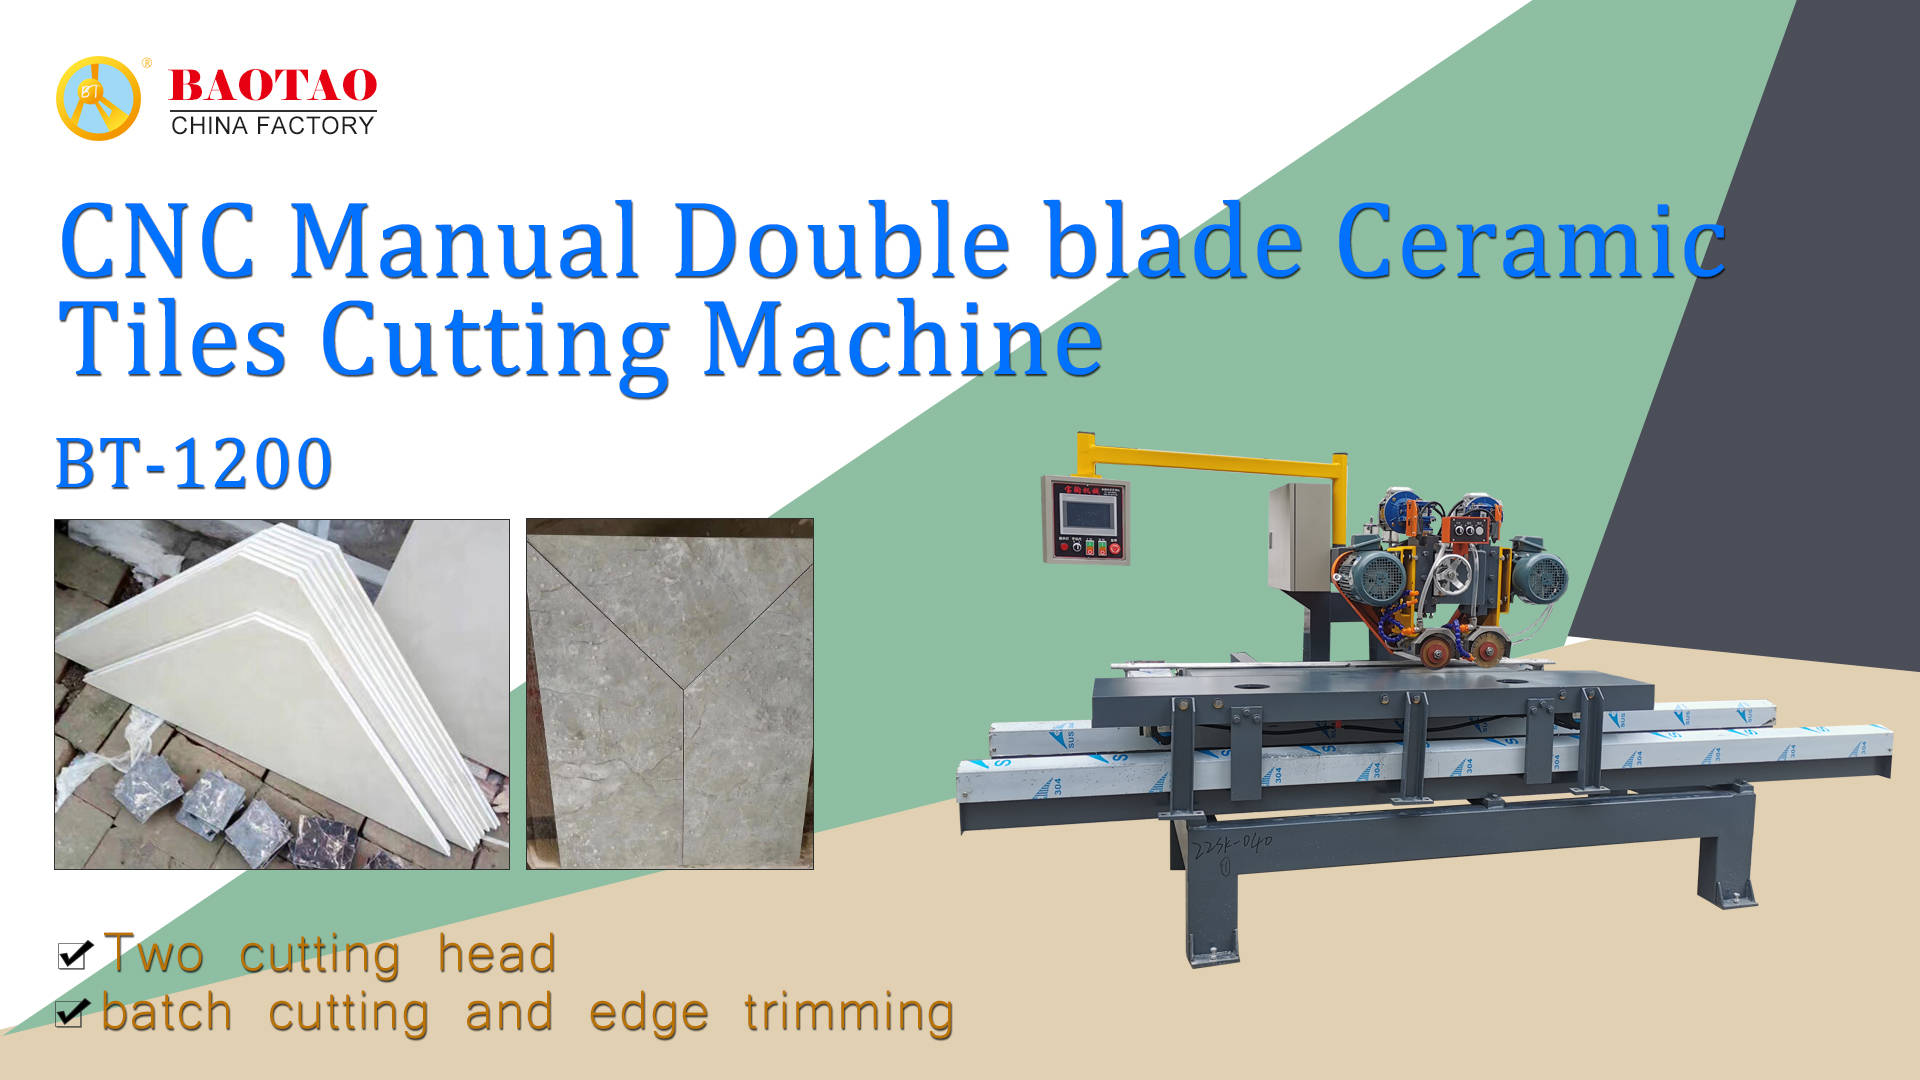 Baotao 1200 Hand push CNC double-blade cutting machine